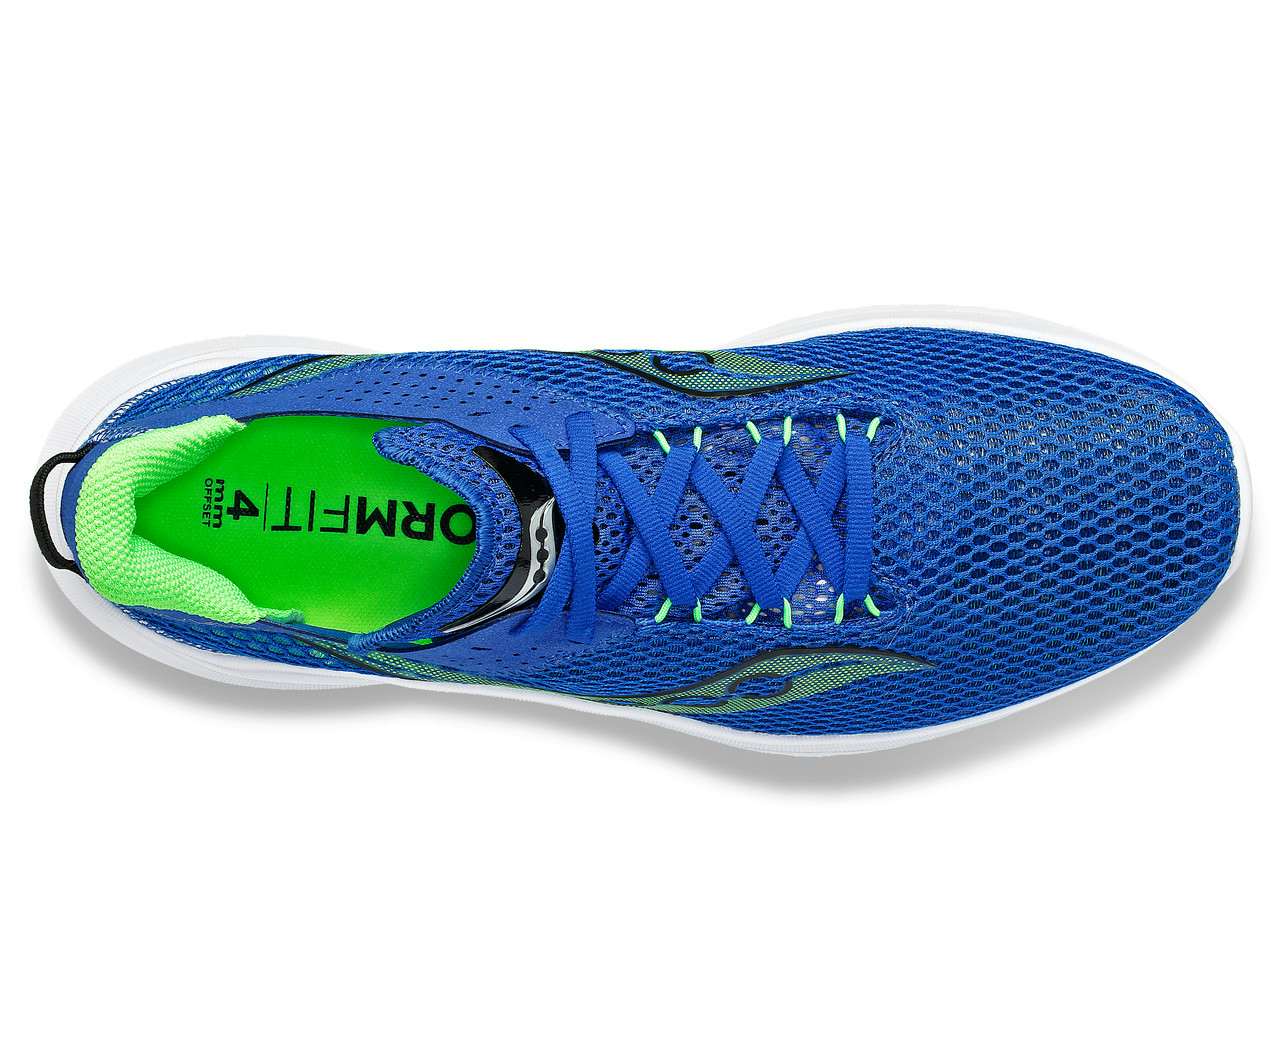 Kinvara 14 Road Running Shoes Superblue/Slime